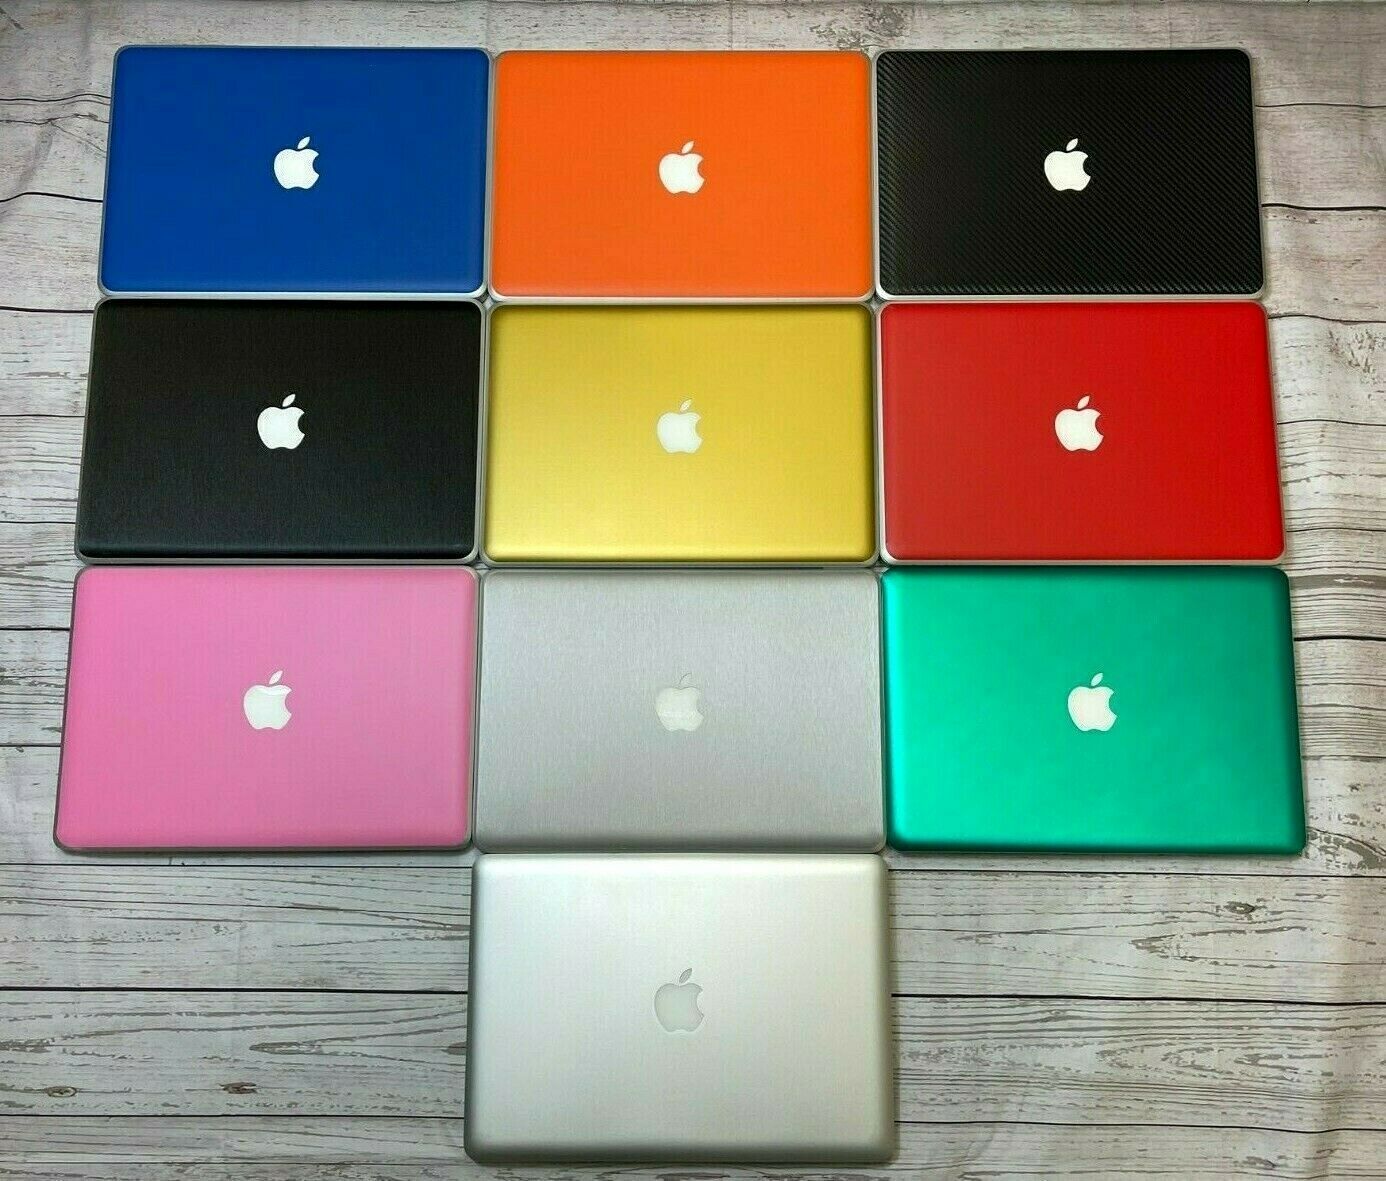 Apple Macbook Pro 13" Laptop | UPGRADED i5 16GB RAM | 1TB HD | MacOS | WARRANTY Apple Does Not Apply